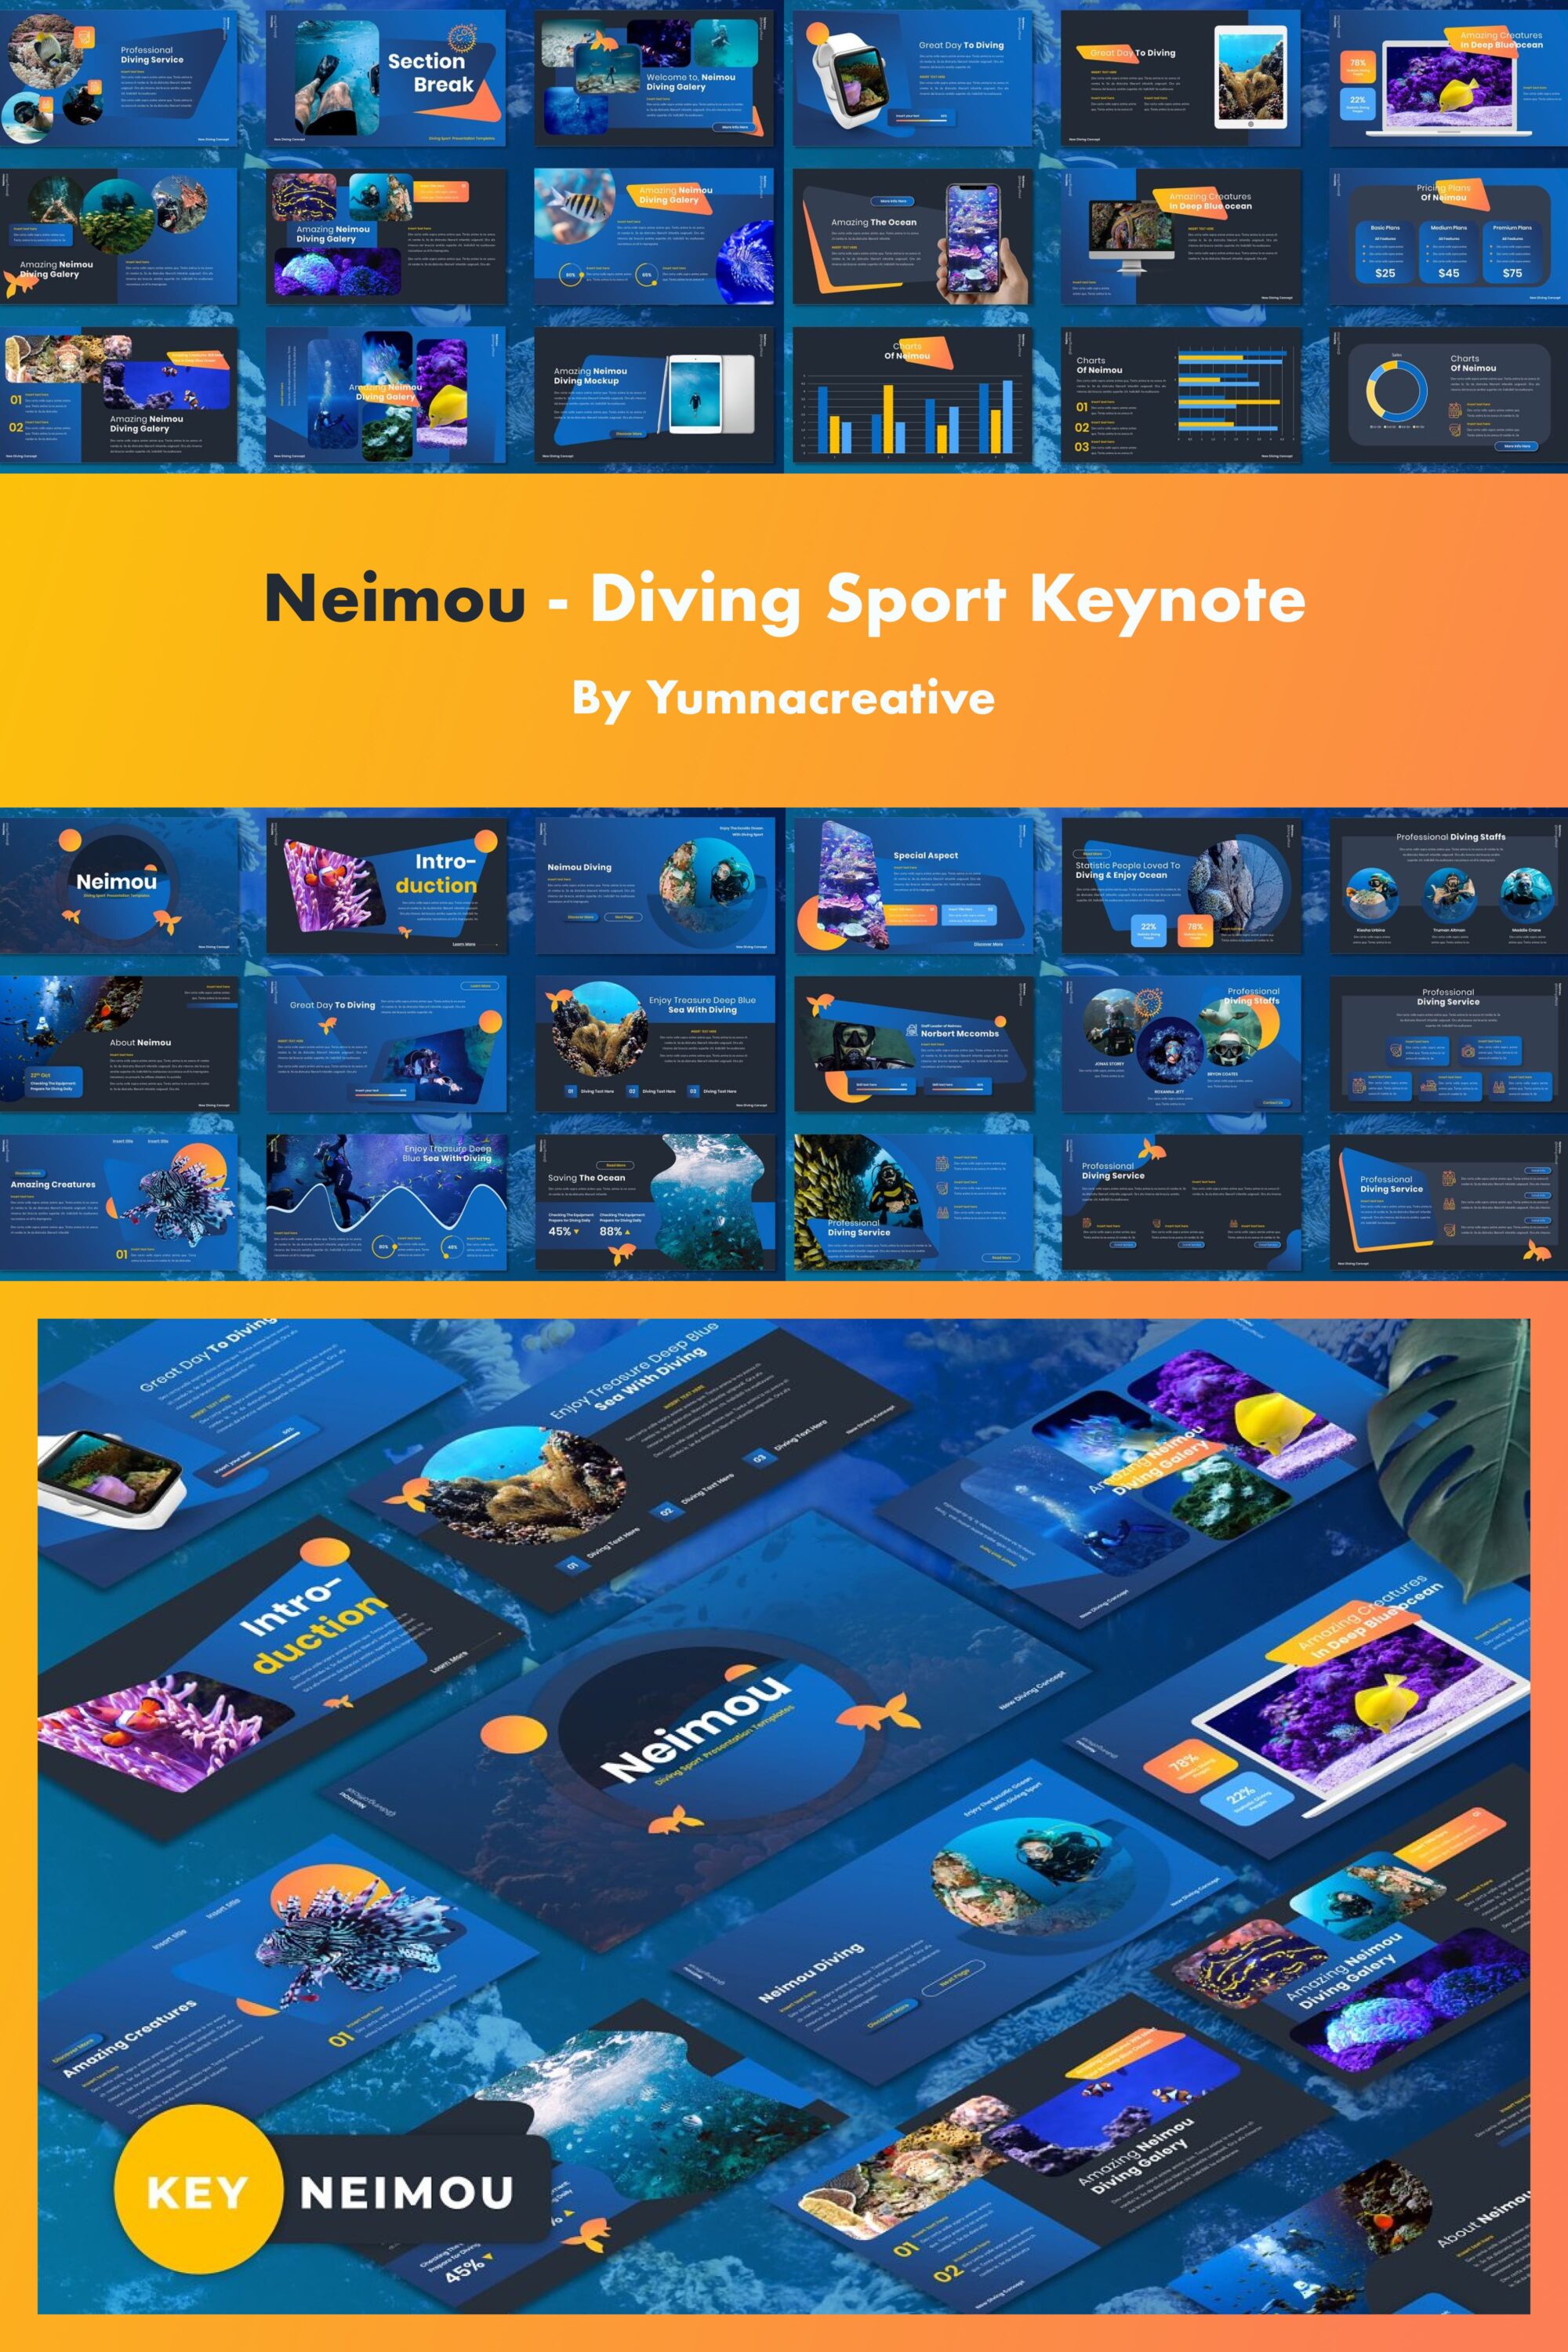 Neimou Diving Sport Keynote - pinterest image preview.